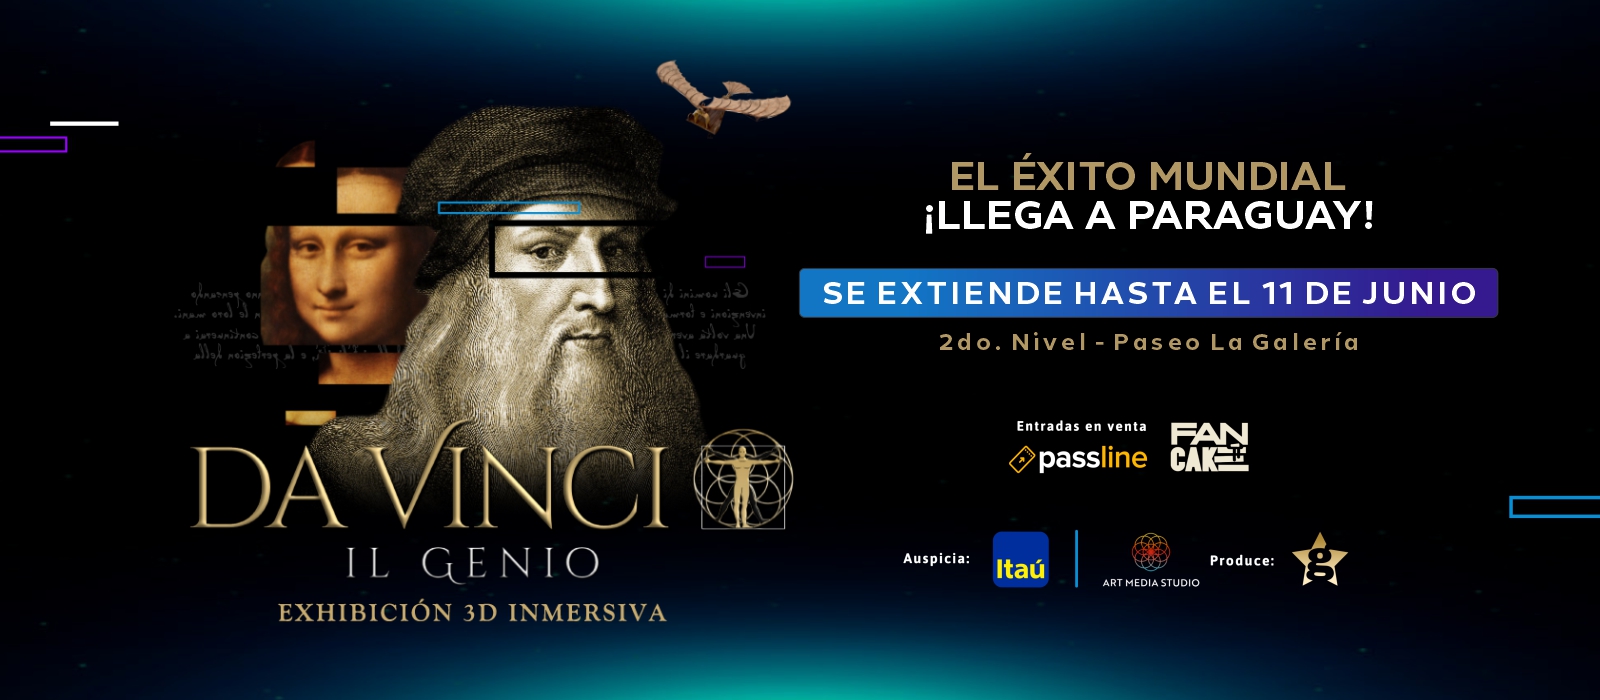 Exposición inmersiva en 3D - Da Vinci